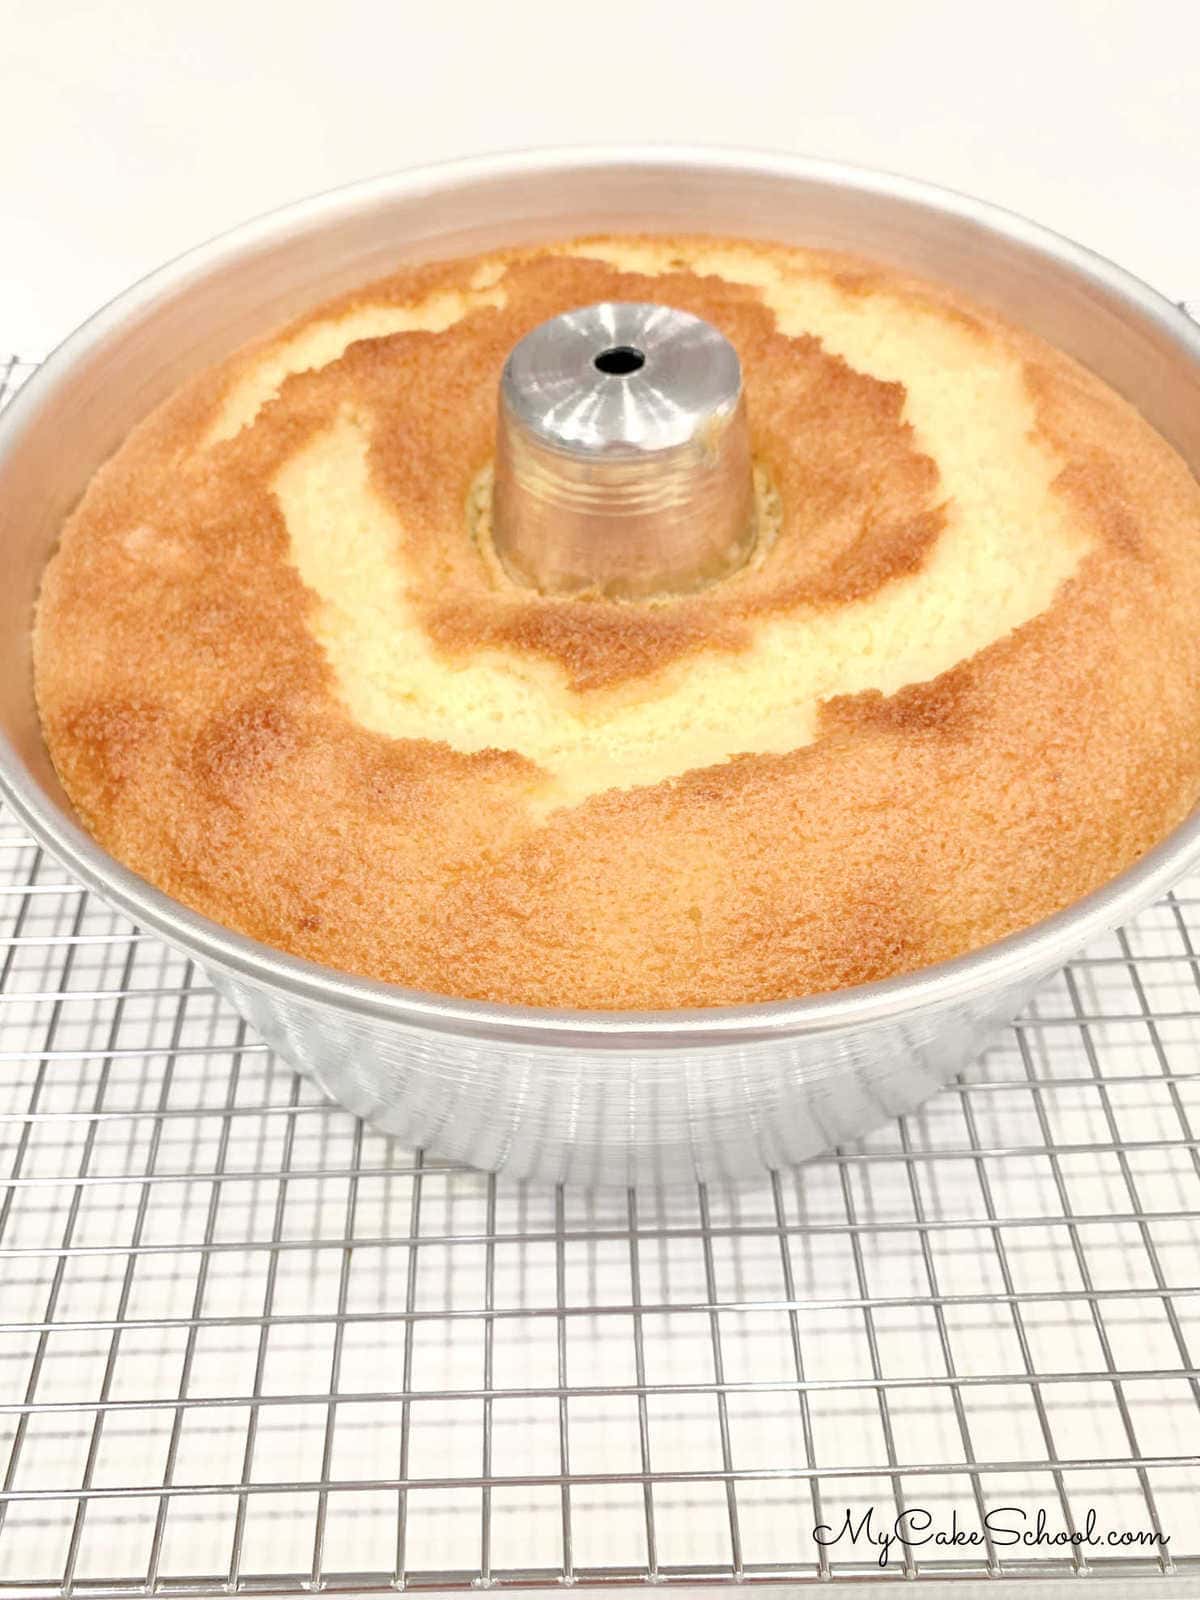 Lemon Chiffon Cake Recipe- So delicious, light, and airy!